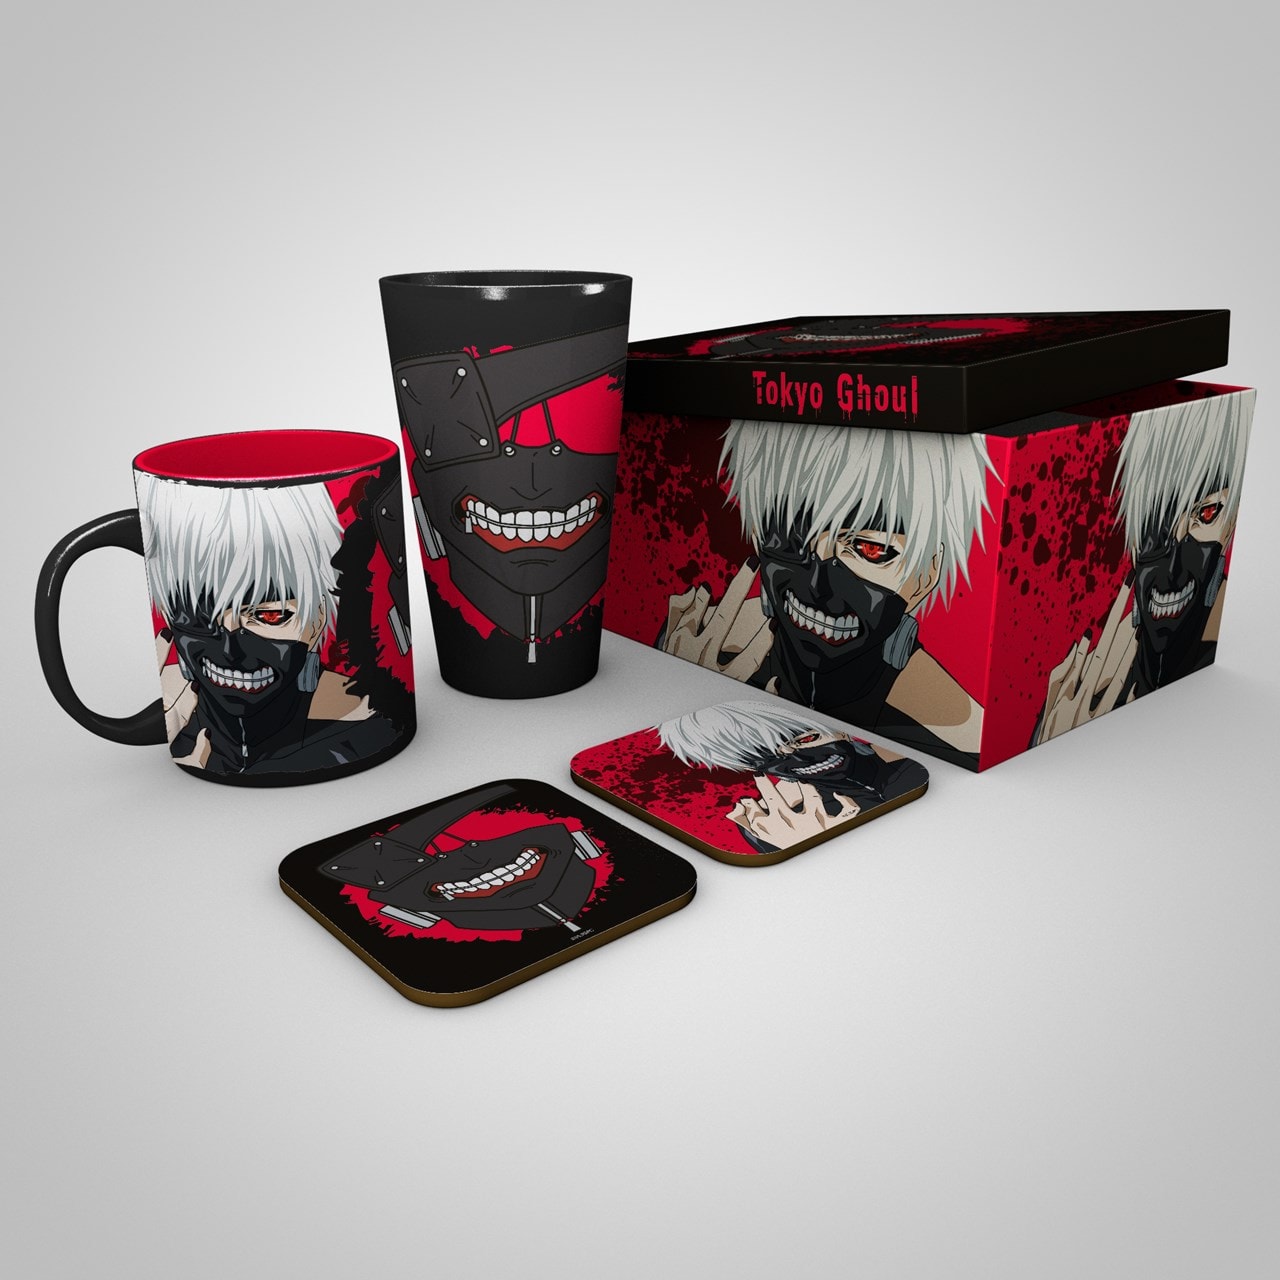 Tokyo Ghoul Gift Box Mug Gift Set Free shipping over £